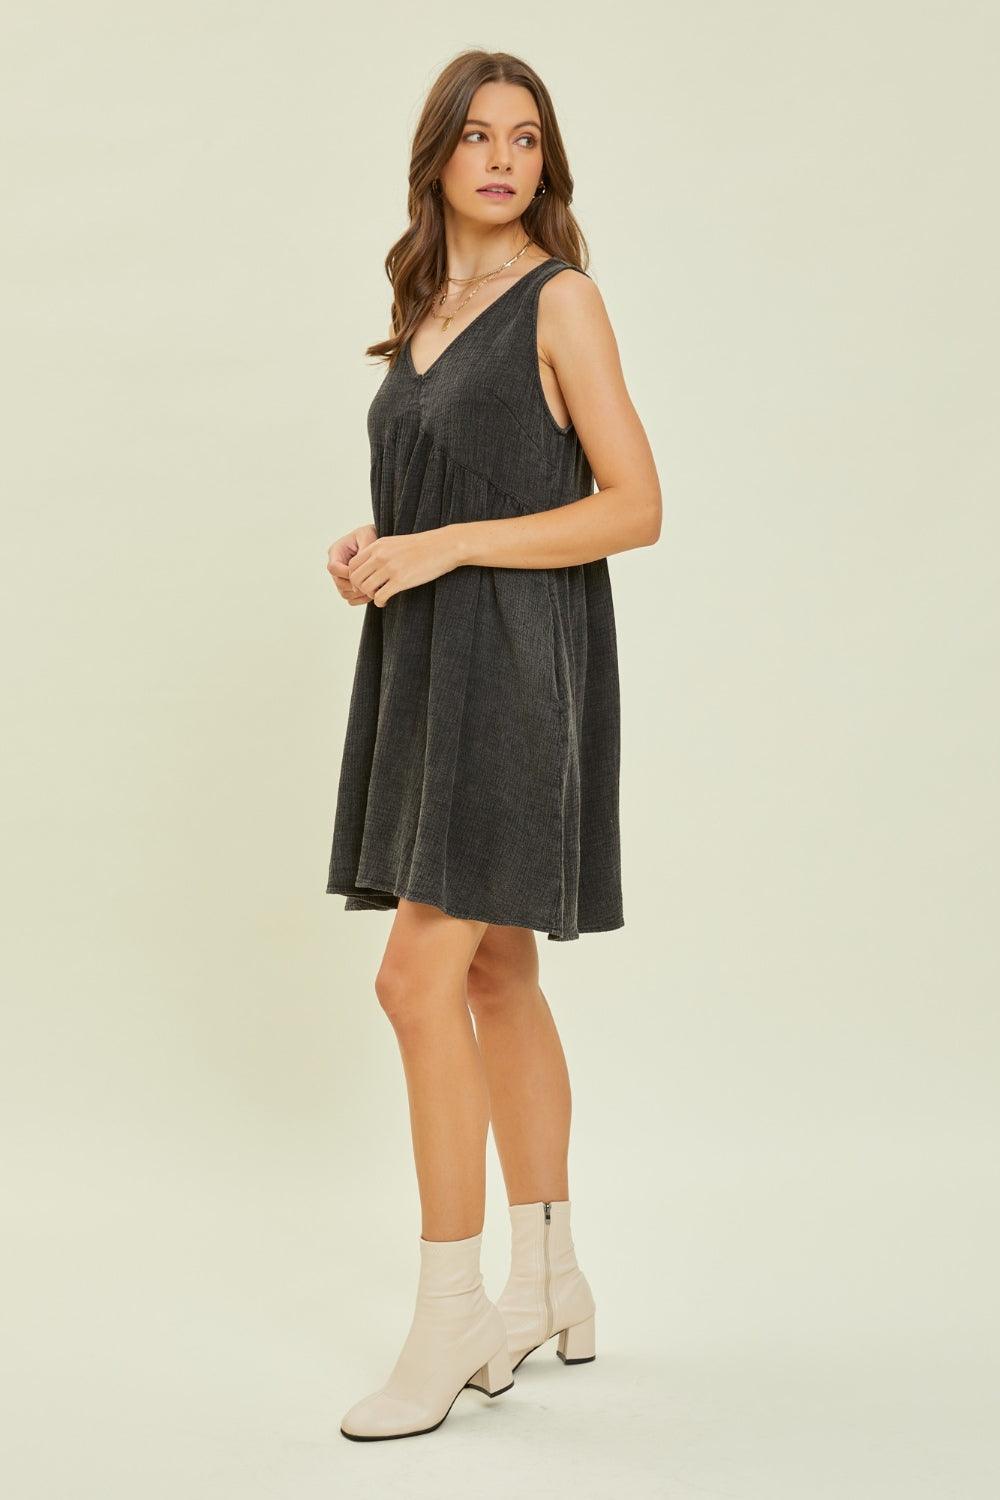 HEYSON Full Size Texture V-Neck Sleeveless Flare Mini Dress - AMIClubwear